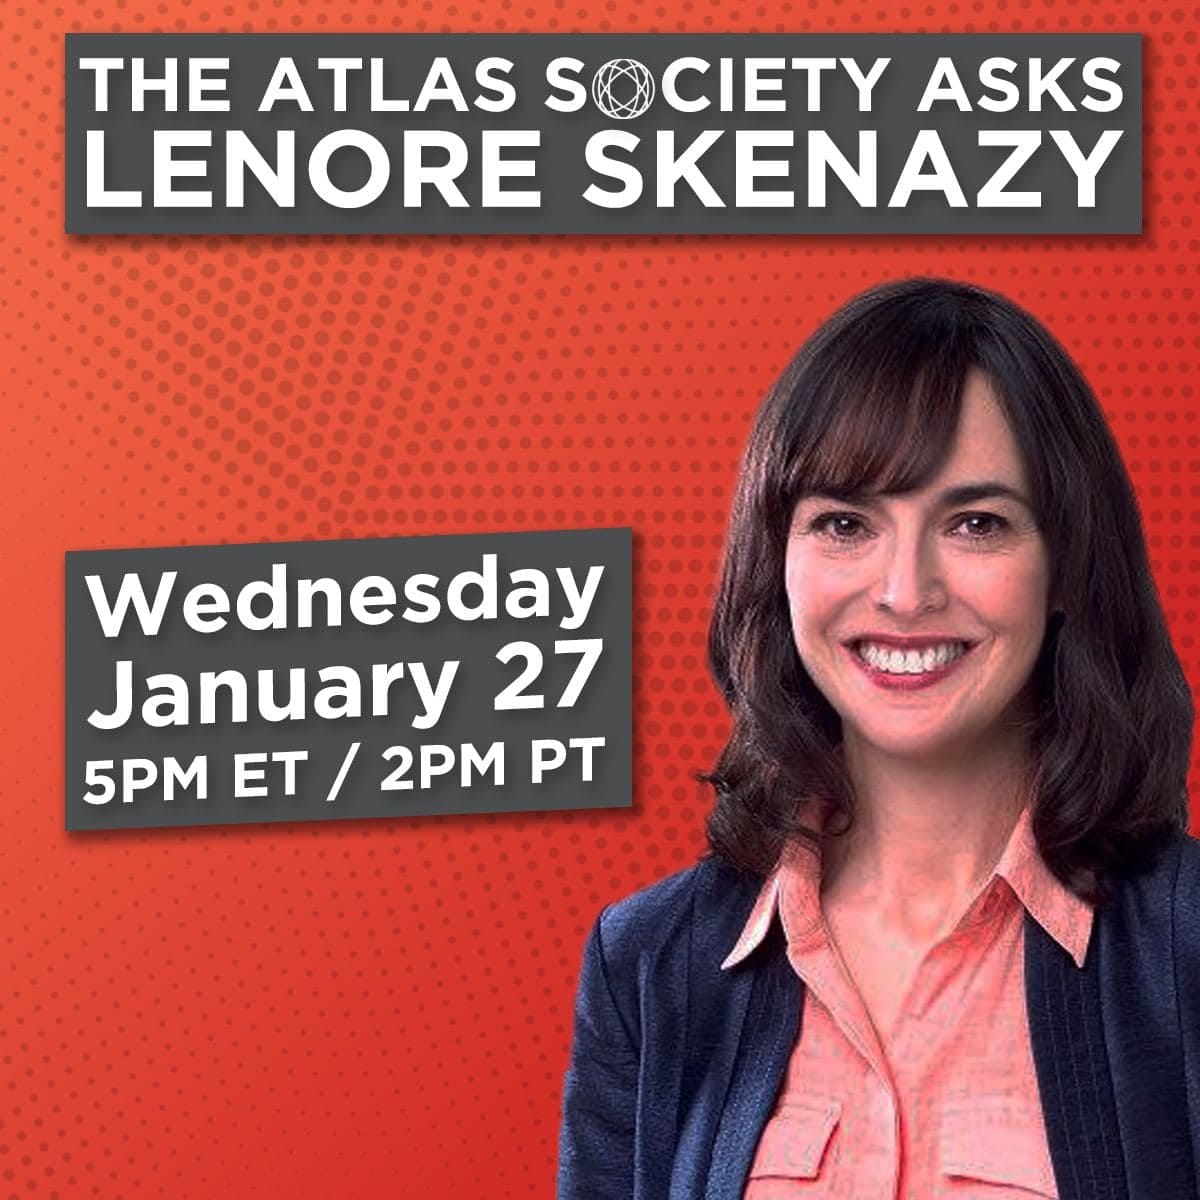 The Atlas Society Asks Lenore Skenazy